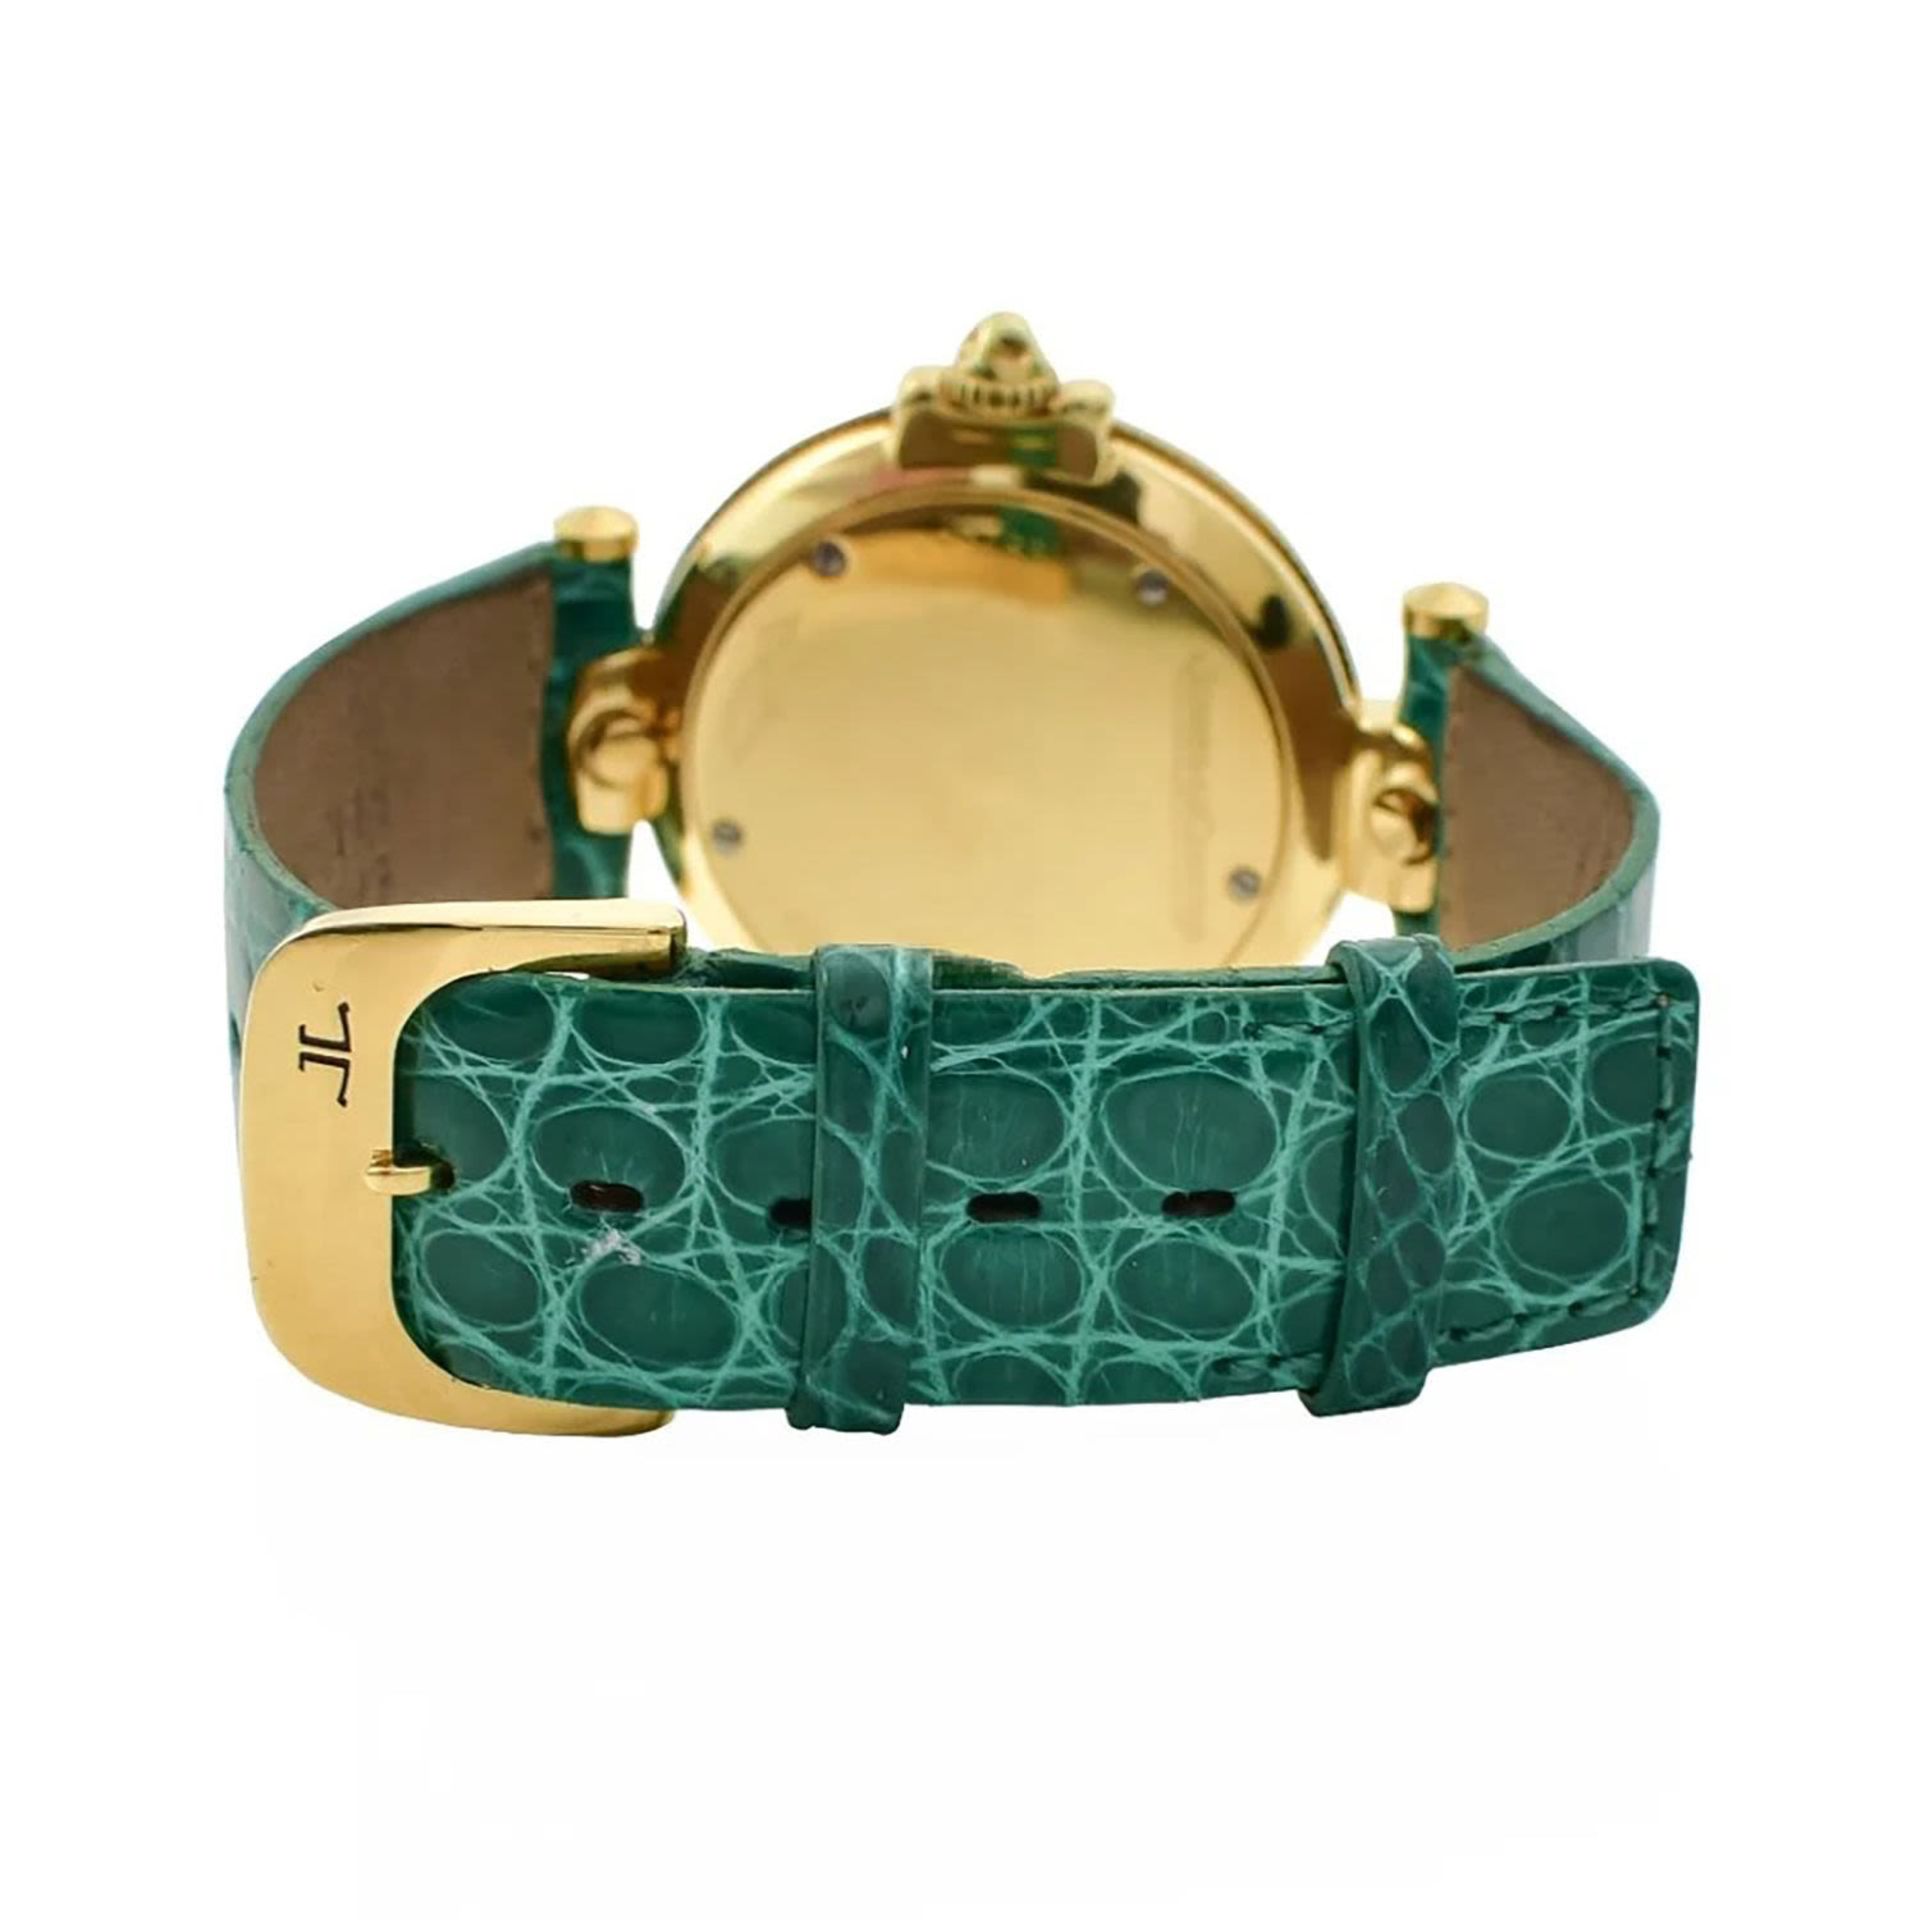 Elegant Vintage Jaeger Le Coultre wristwatch in 18k gold Rendez-Vous model. For Lady - Image 5 of 5